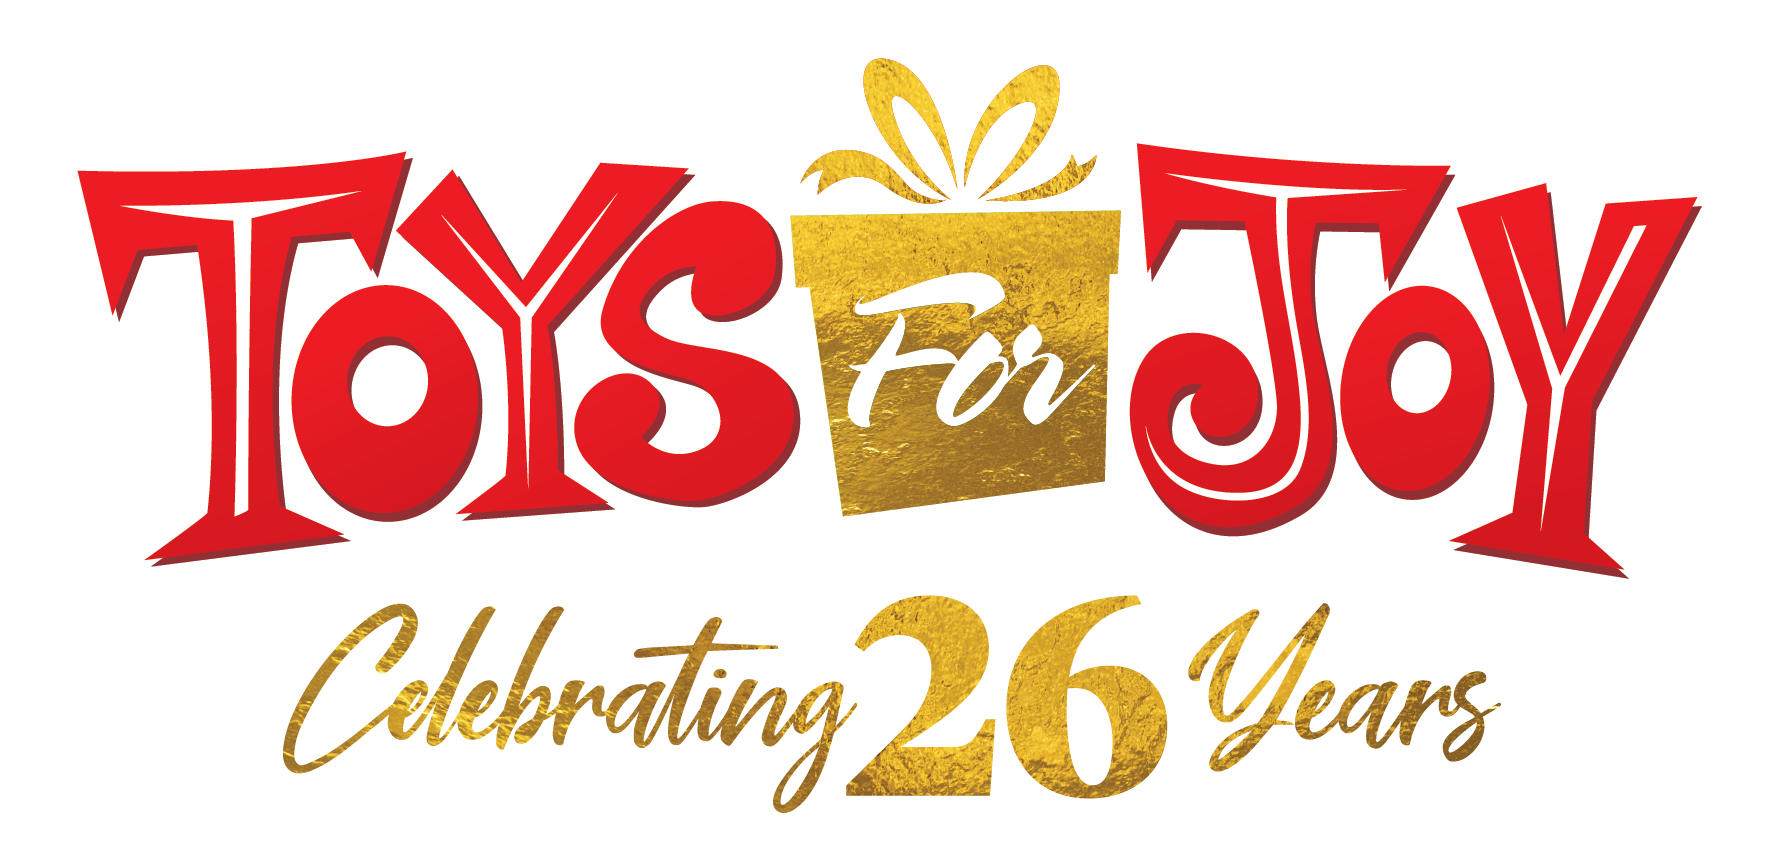 Toys For Joy Logo